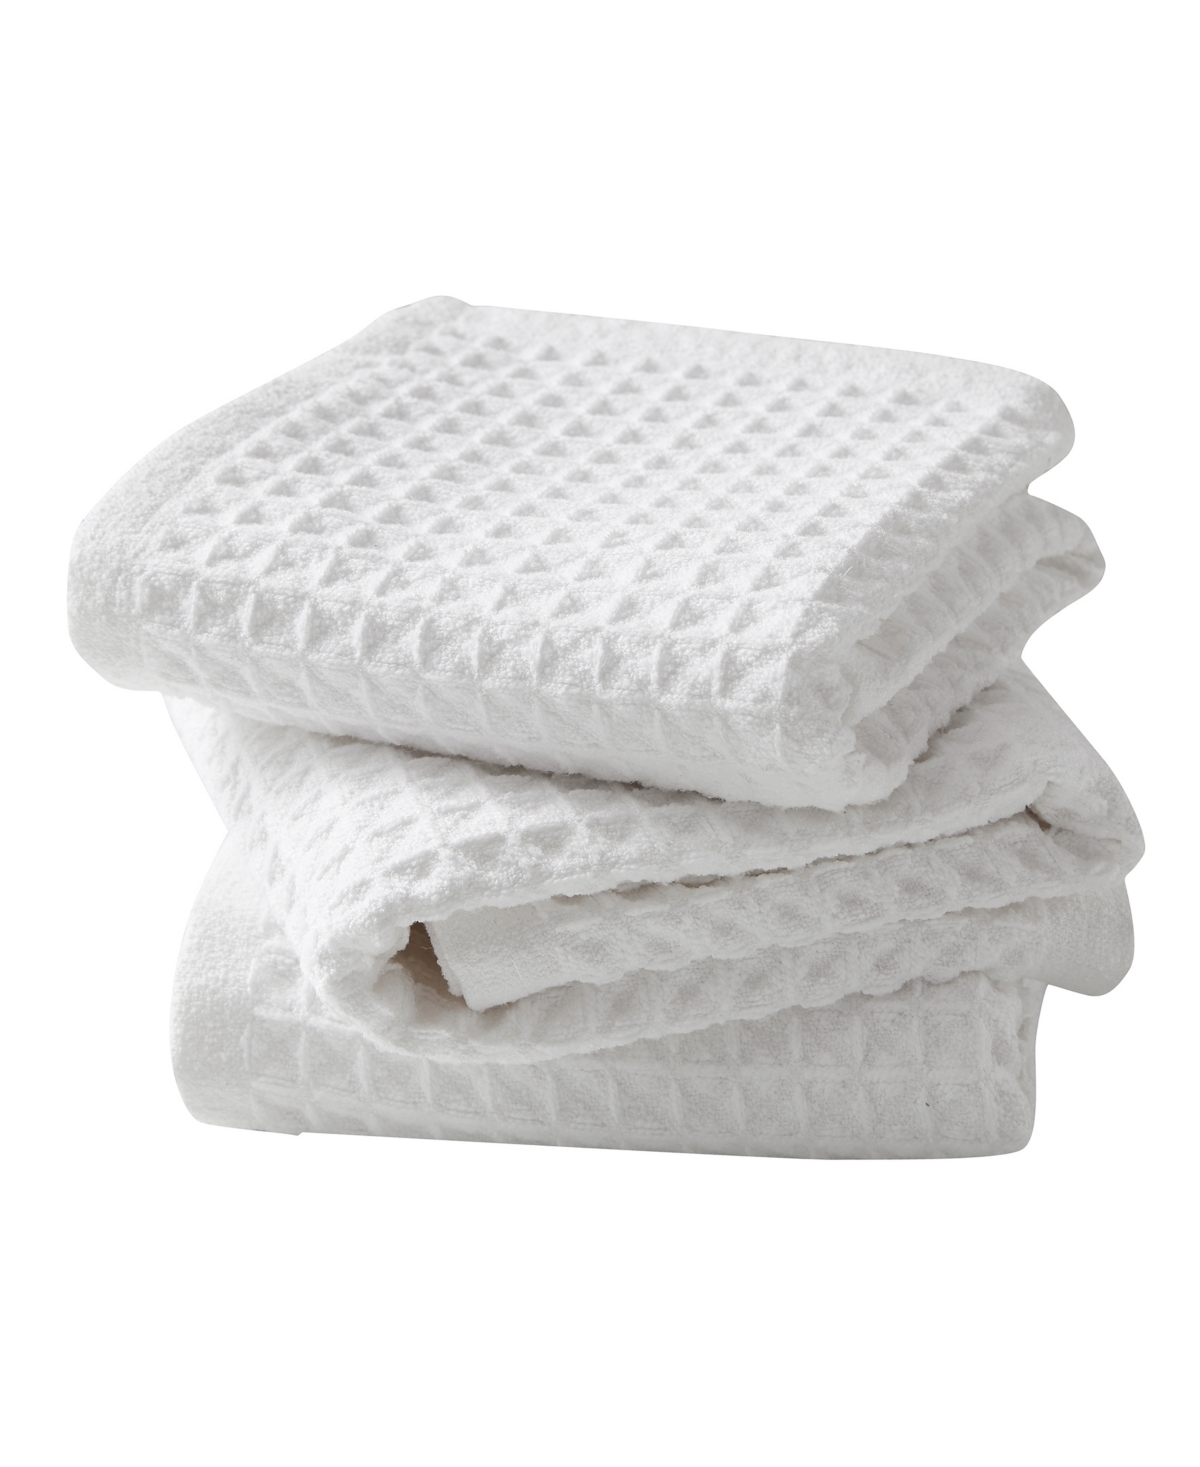 Multi Purpose Microfiber Kitchen Towel, Pack of 3 - White